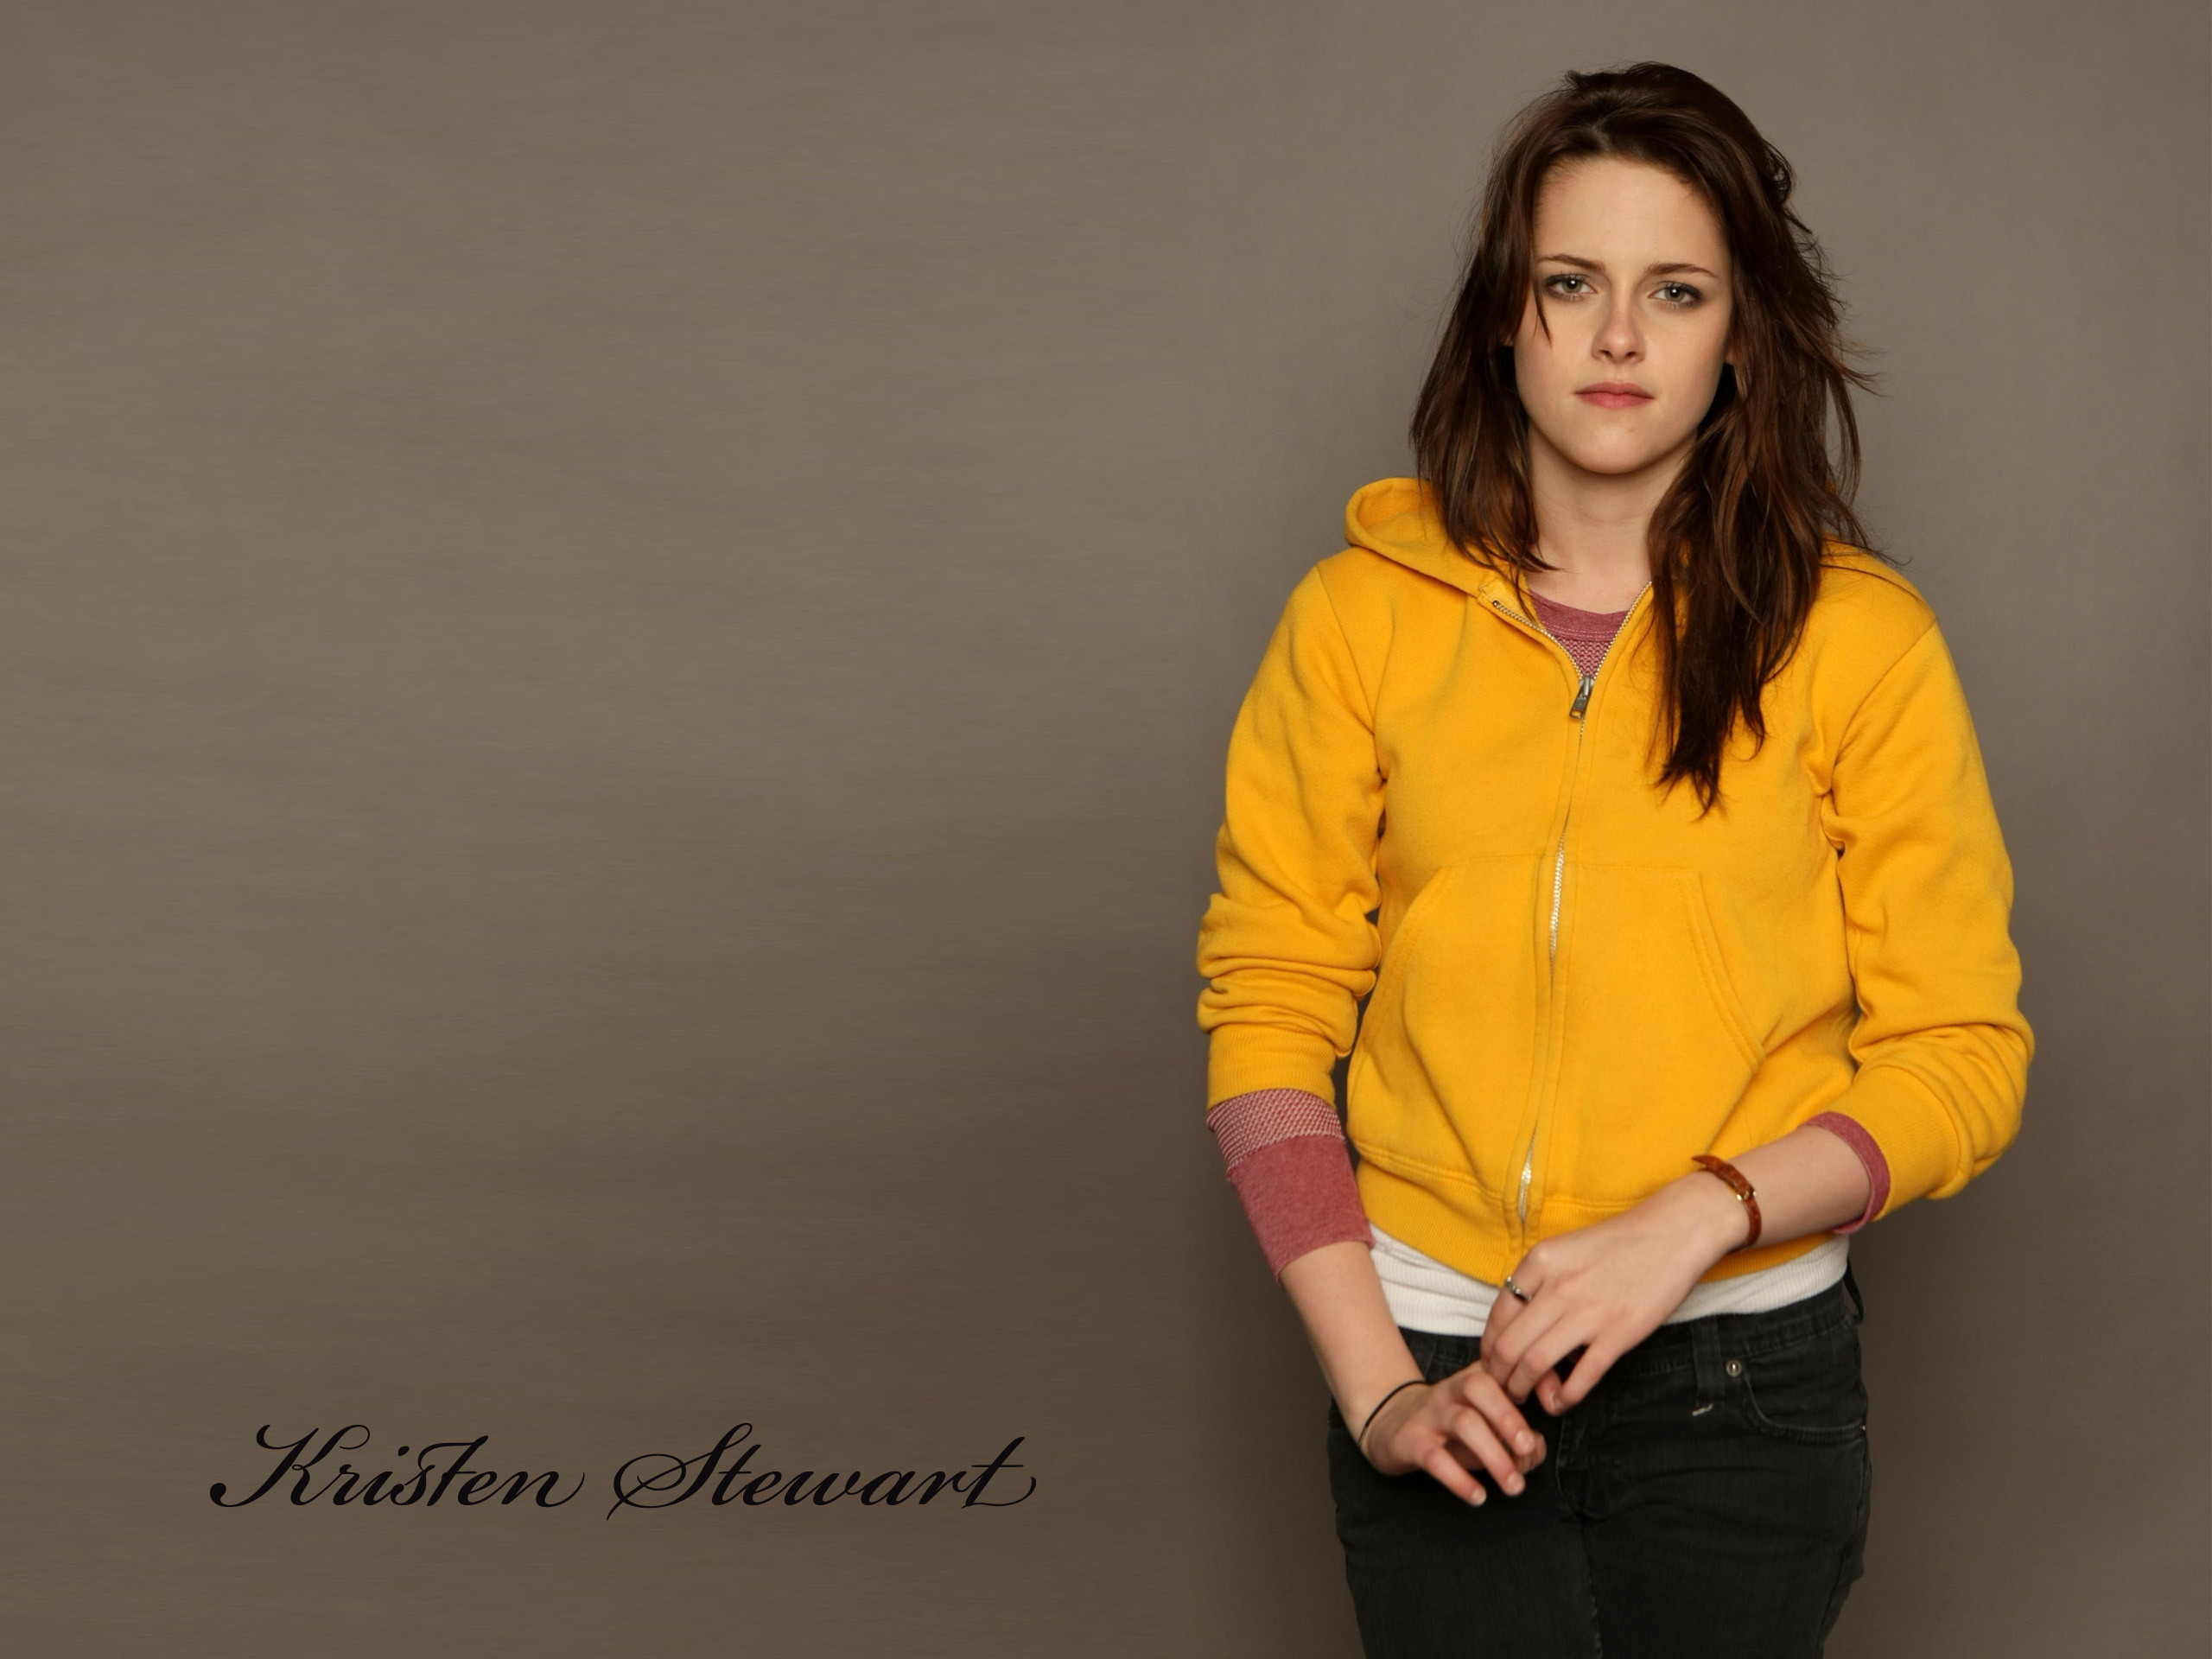 Kristen Stewart - Hd Wallpaper Kristen Stewart , HD Wallpaper & Backgrounds